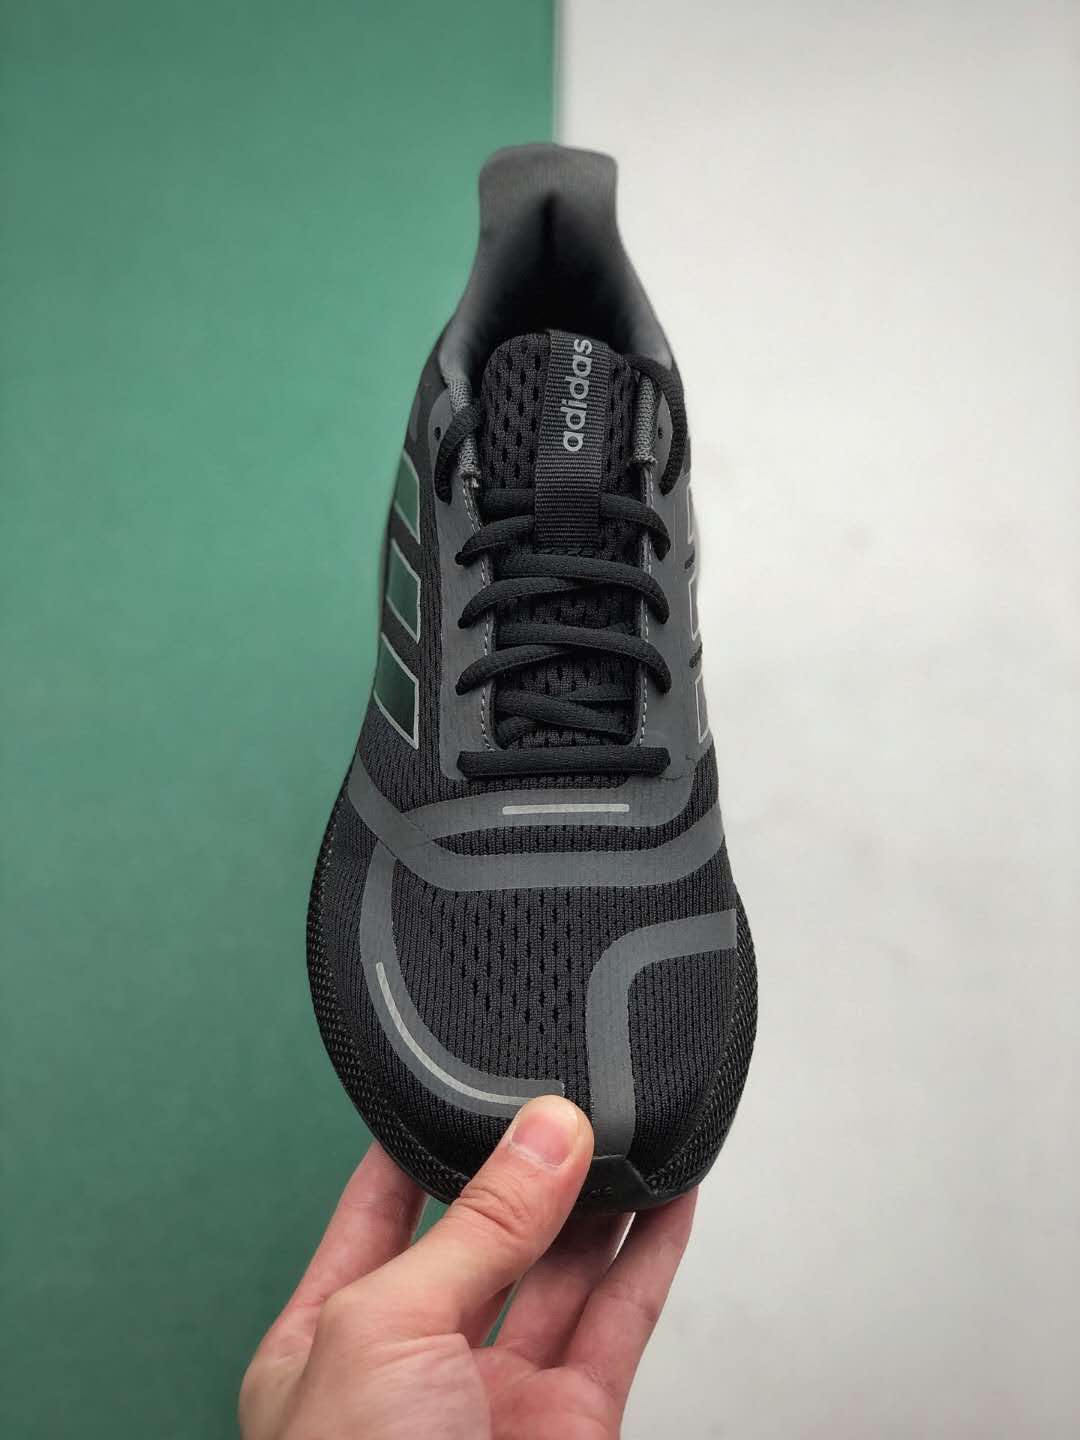 Adidas Nova Run Core Black Grey EE9267 | Shop the Latest Adidas Running Shoes